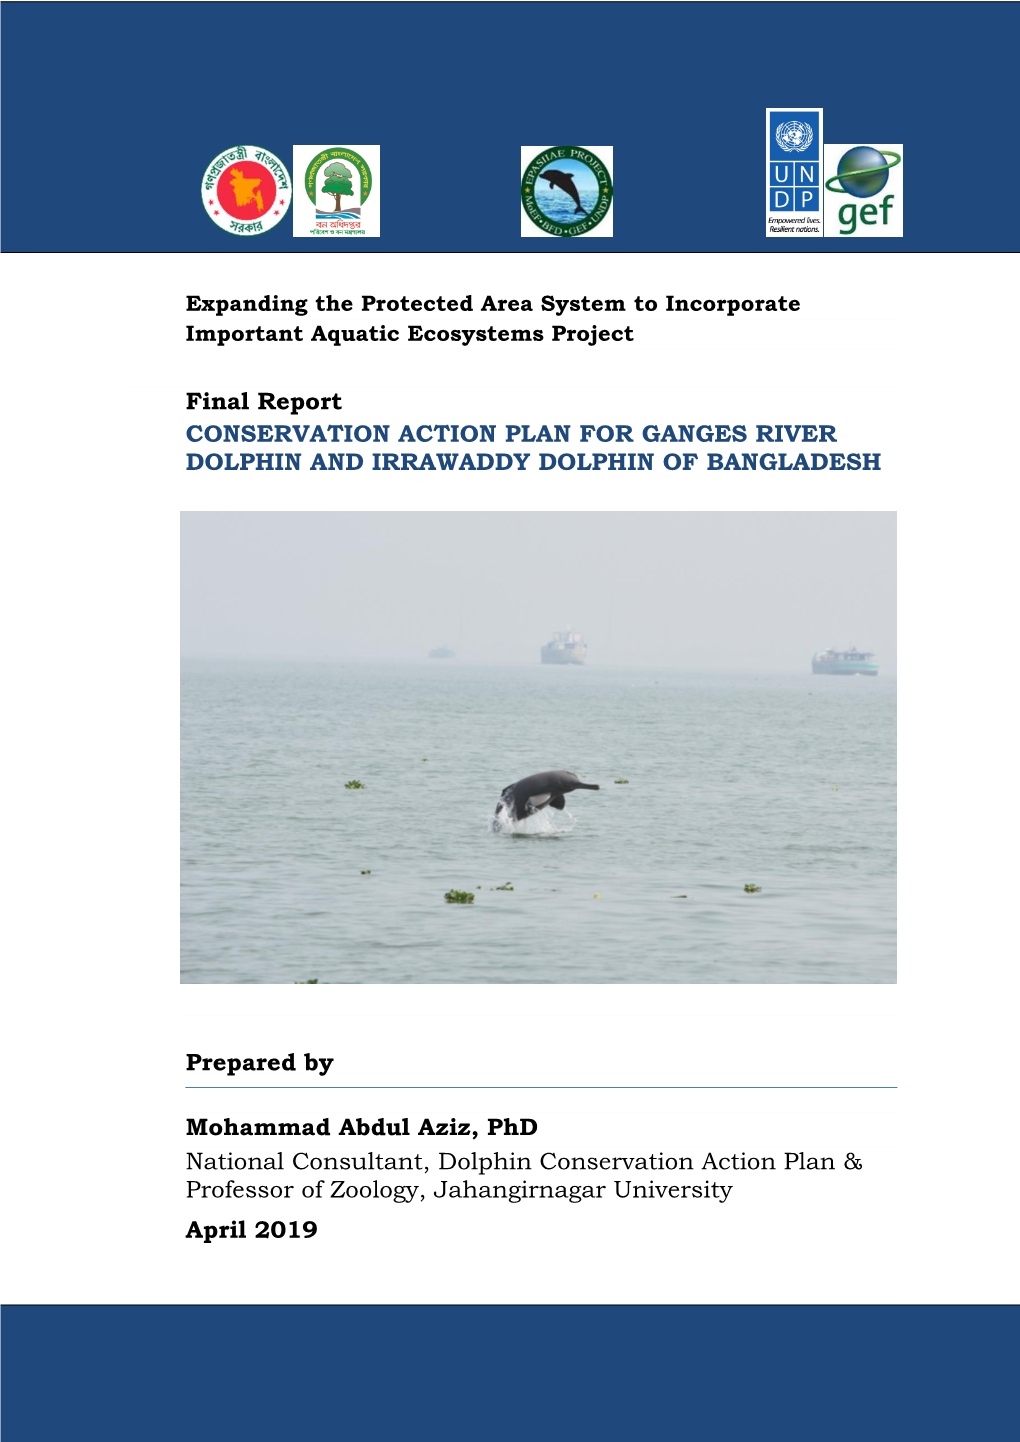 Bangladesh Dolphin Action Plan 2020-2030 Final Report April 2019.Pdf